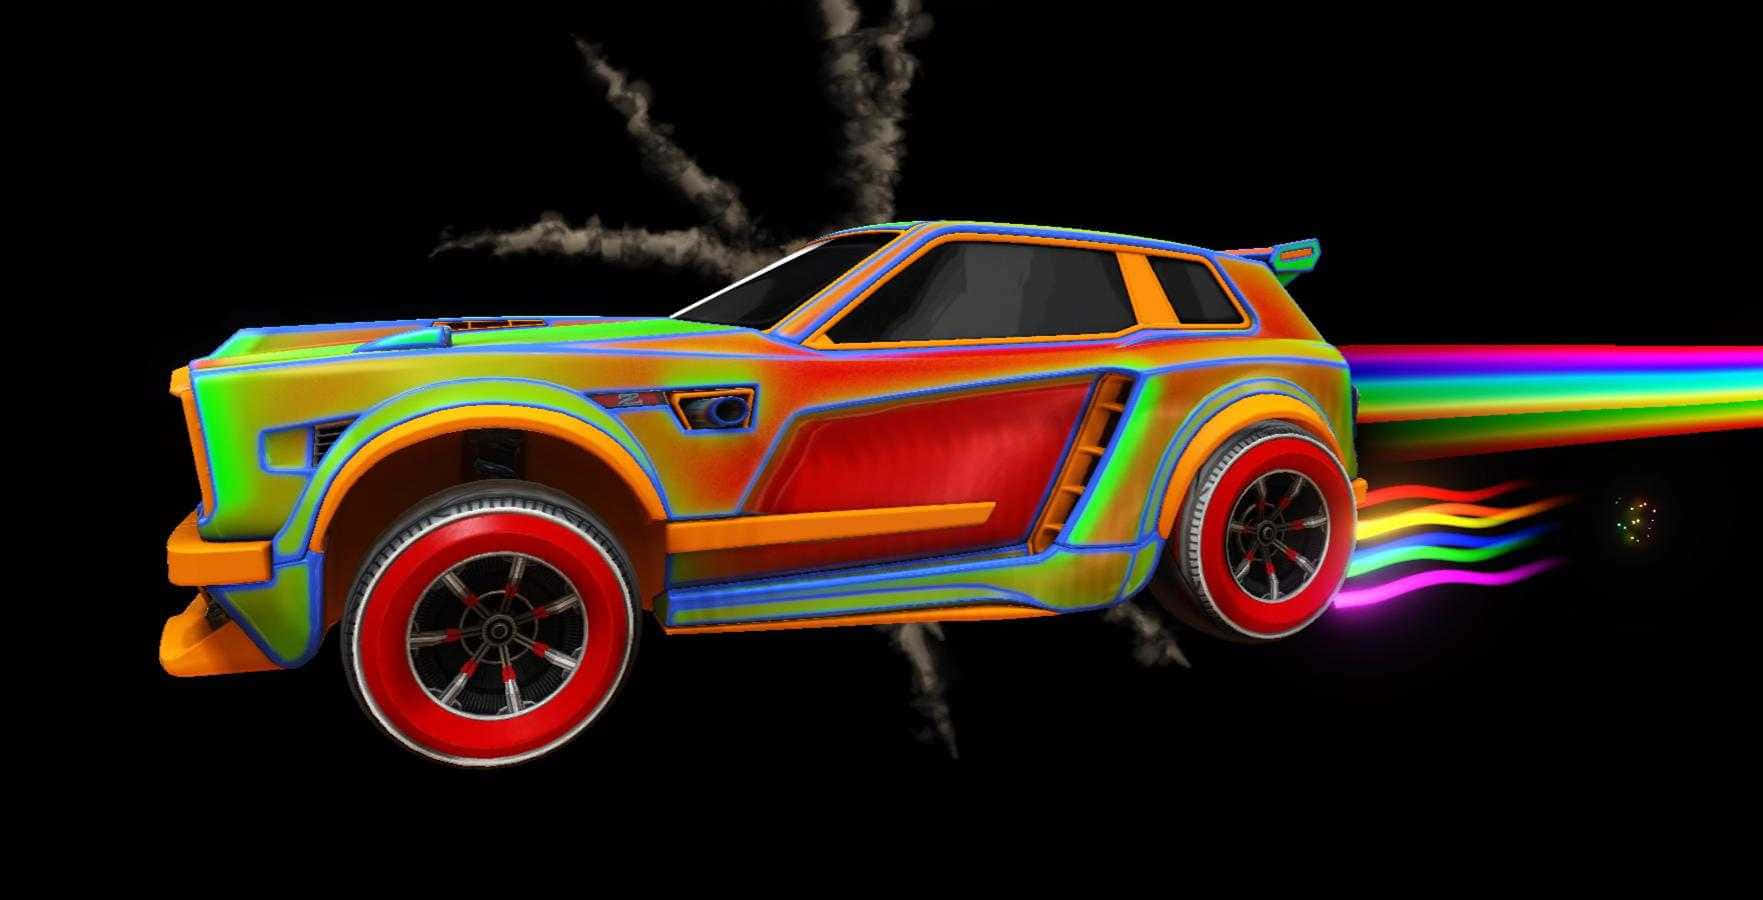 720p Rocket League Background Colorful Car Background